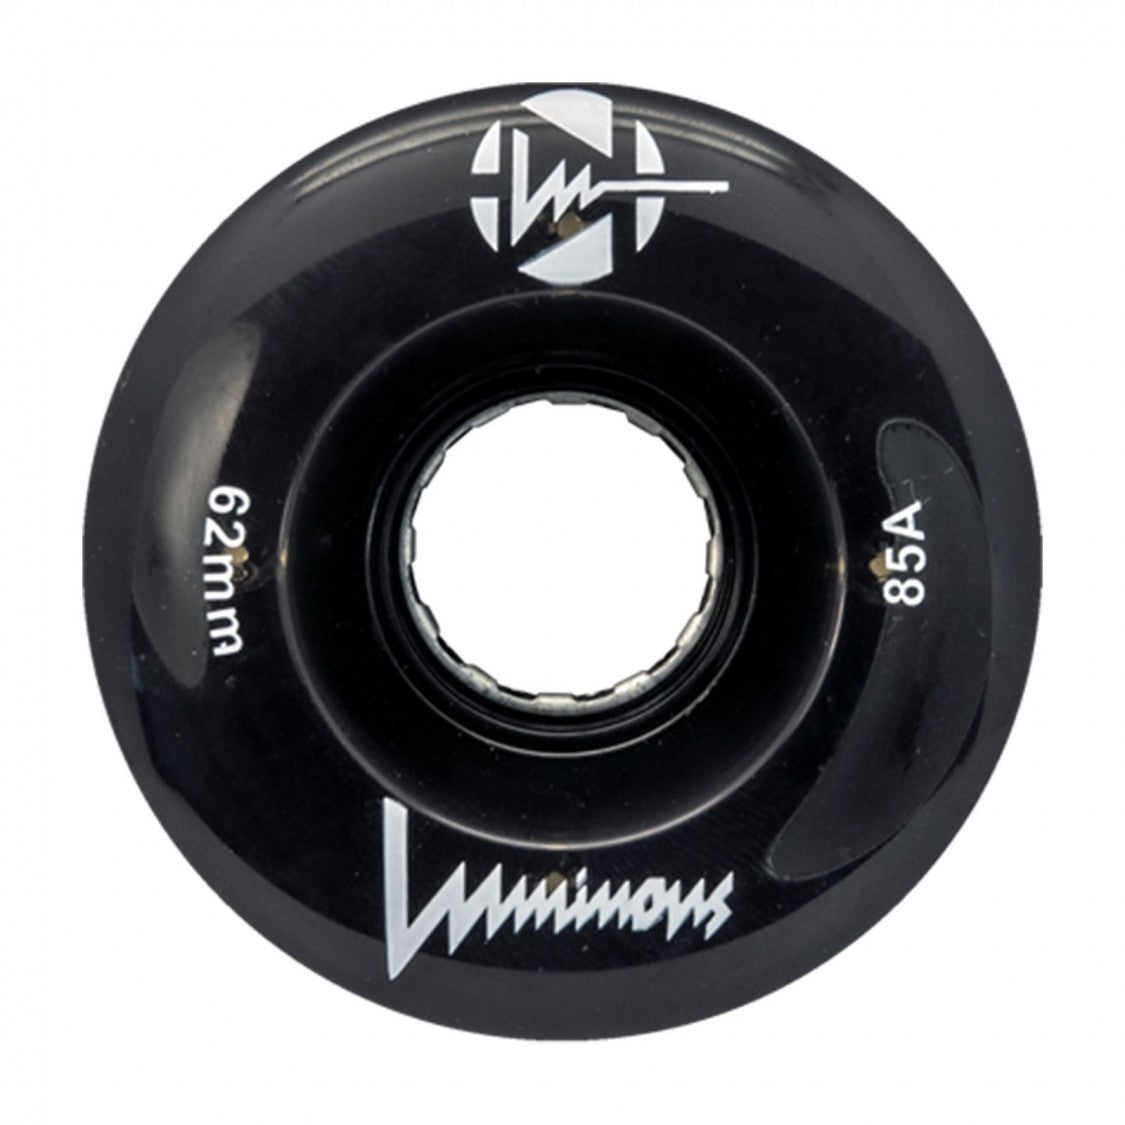 Luminous LED Quad 62mm 85a 4pk Black Roller Skate Wheels